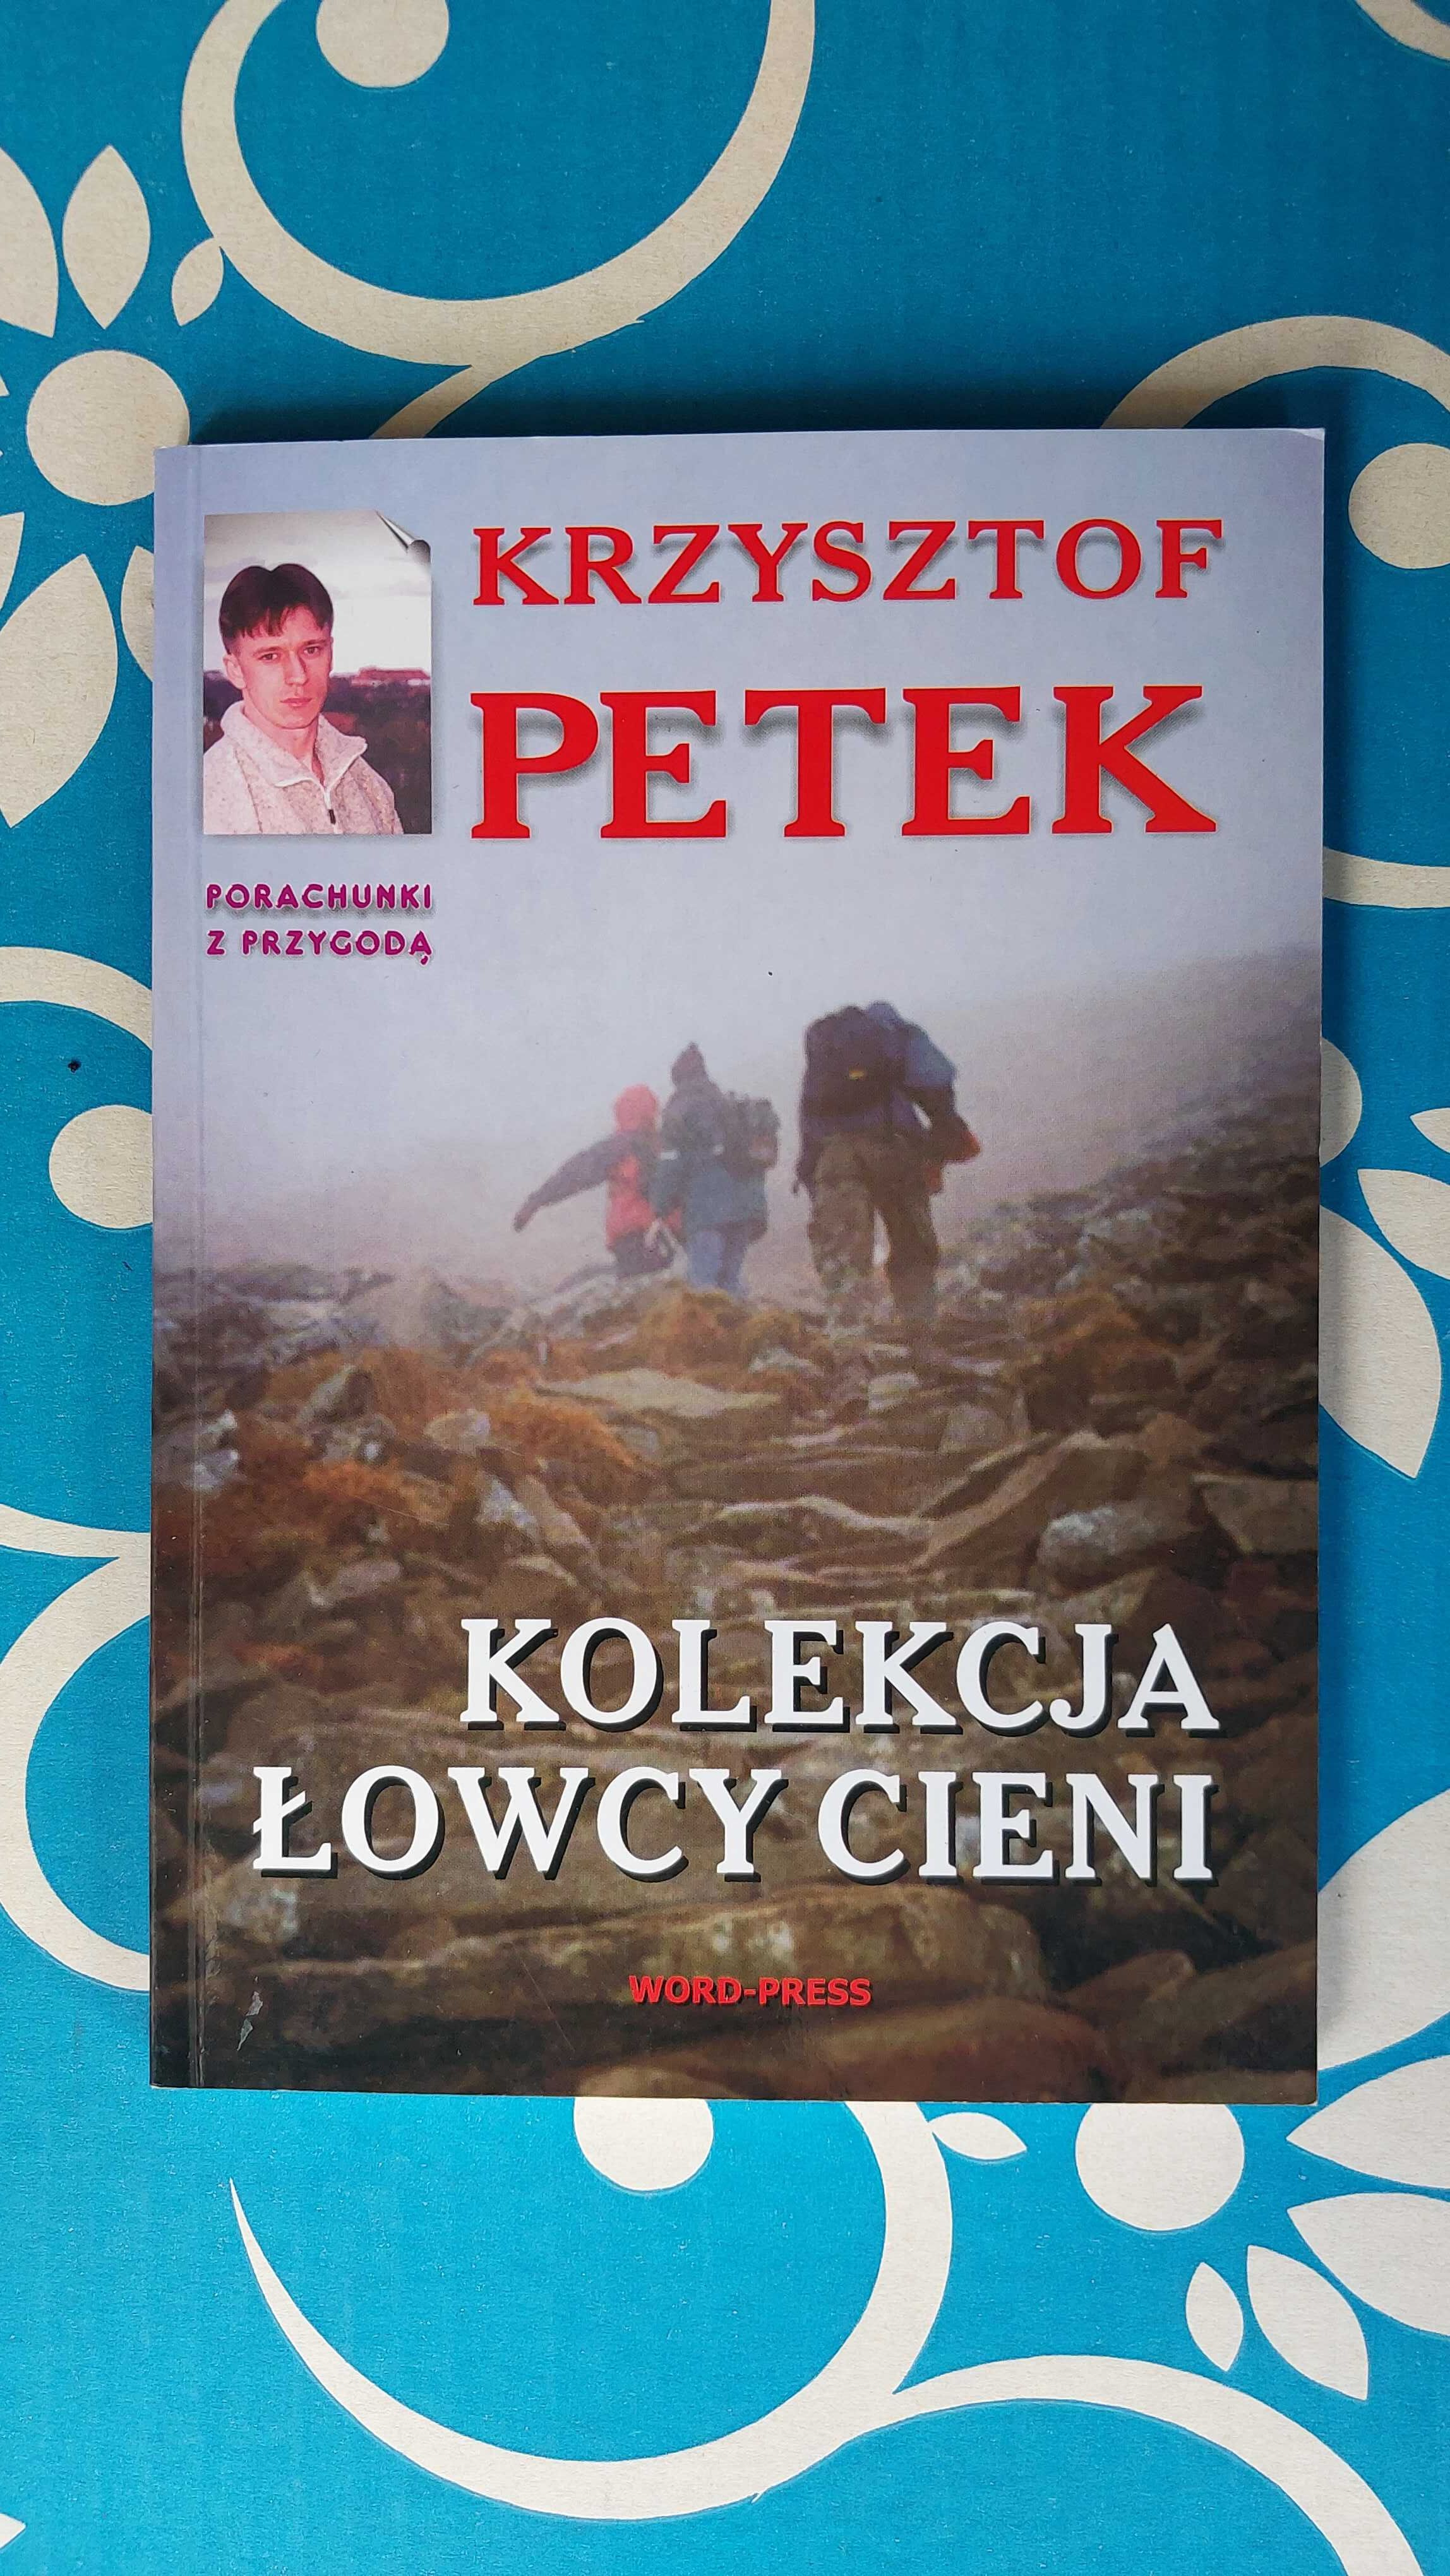 Krzysztof Petek - Kolekcja łowcy cieni